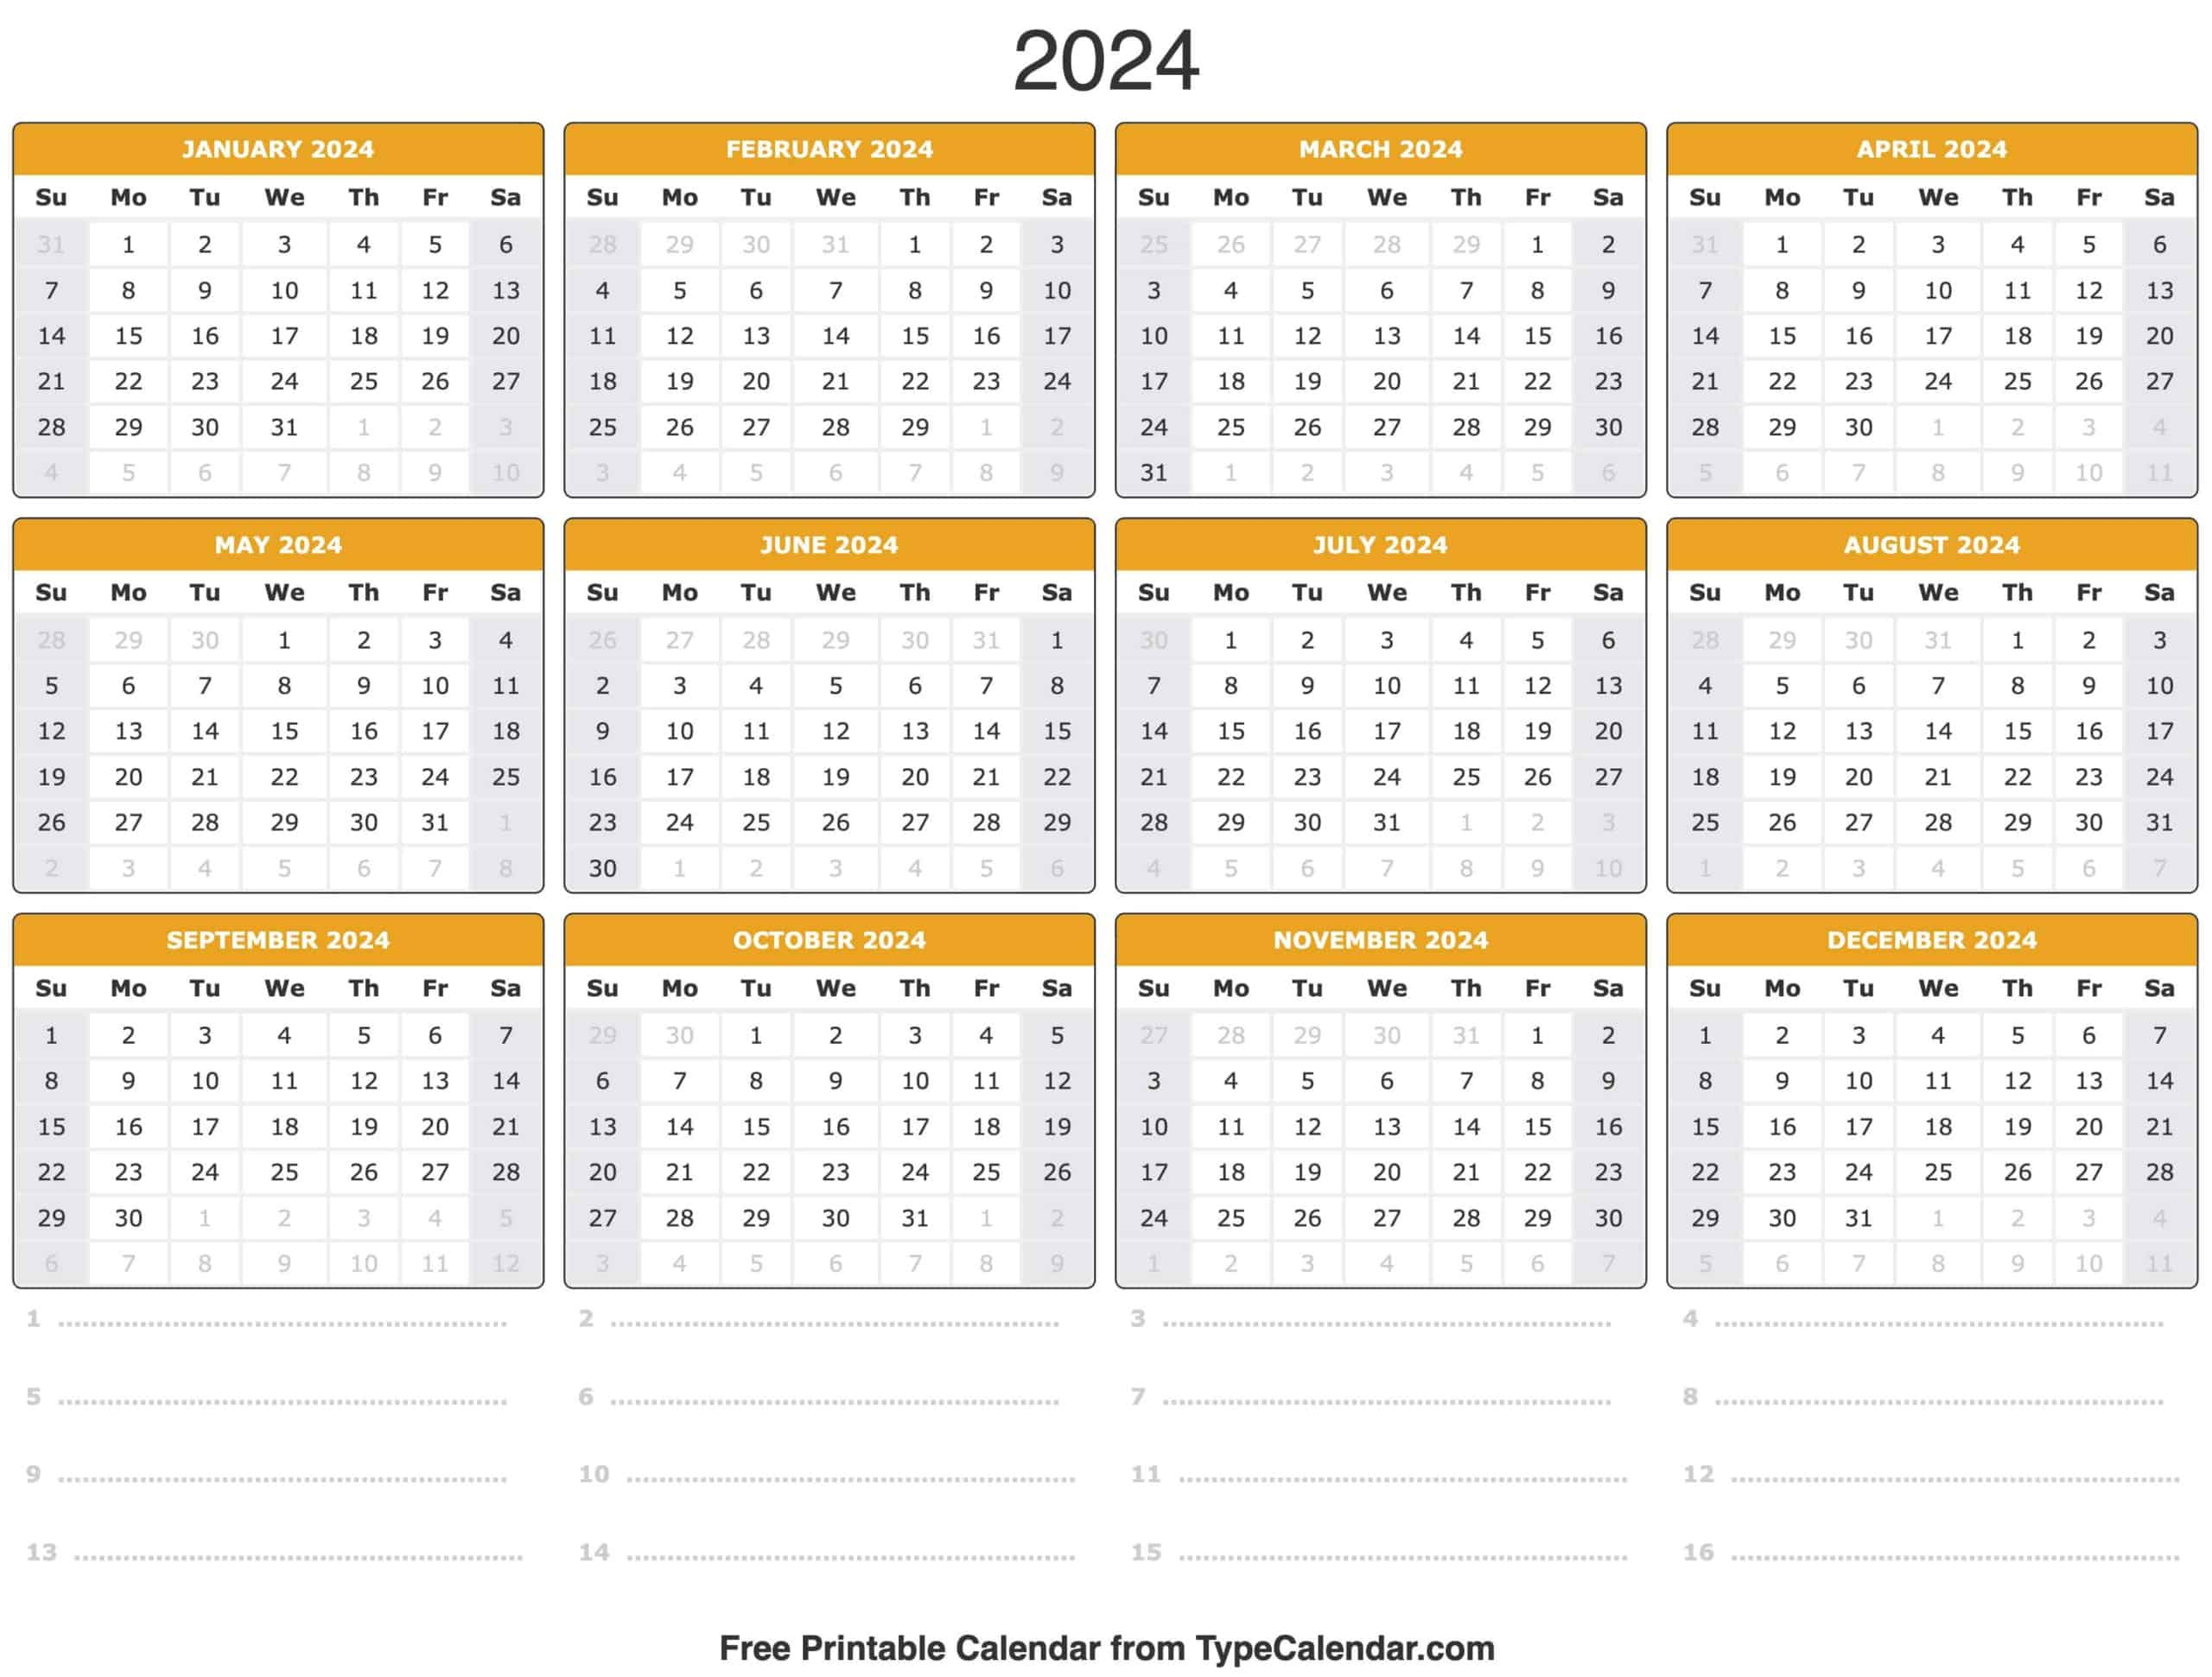 2024 Calendar: Free Printable Calendar With Holidays | 2024 Yearly Calendar Google Sheets